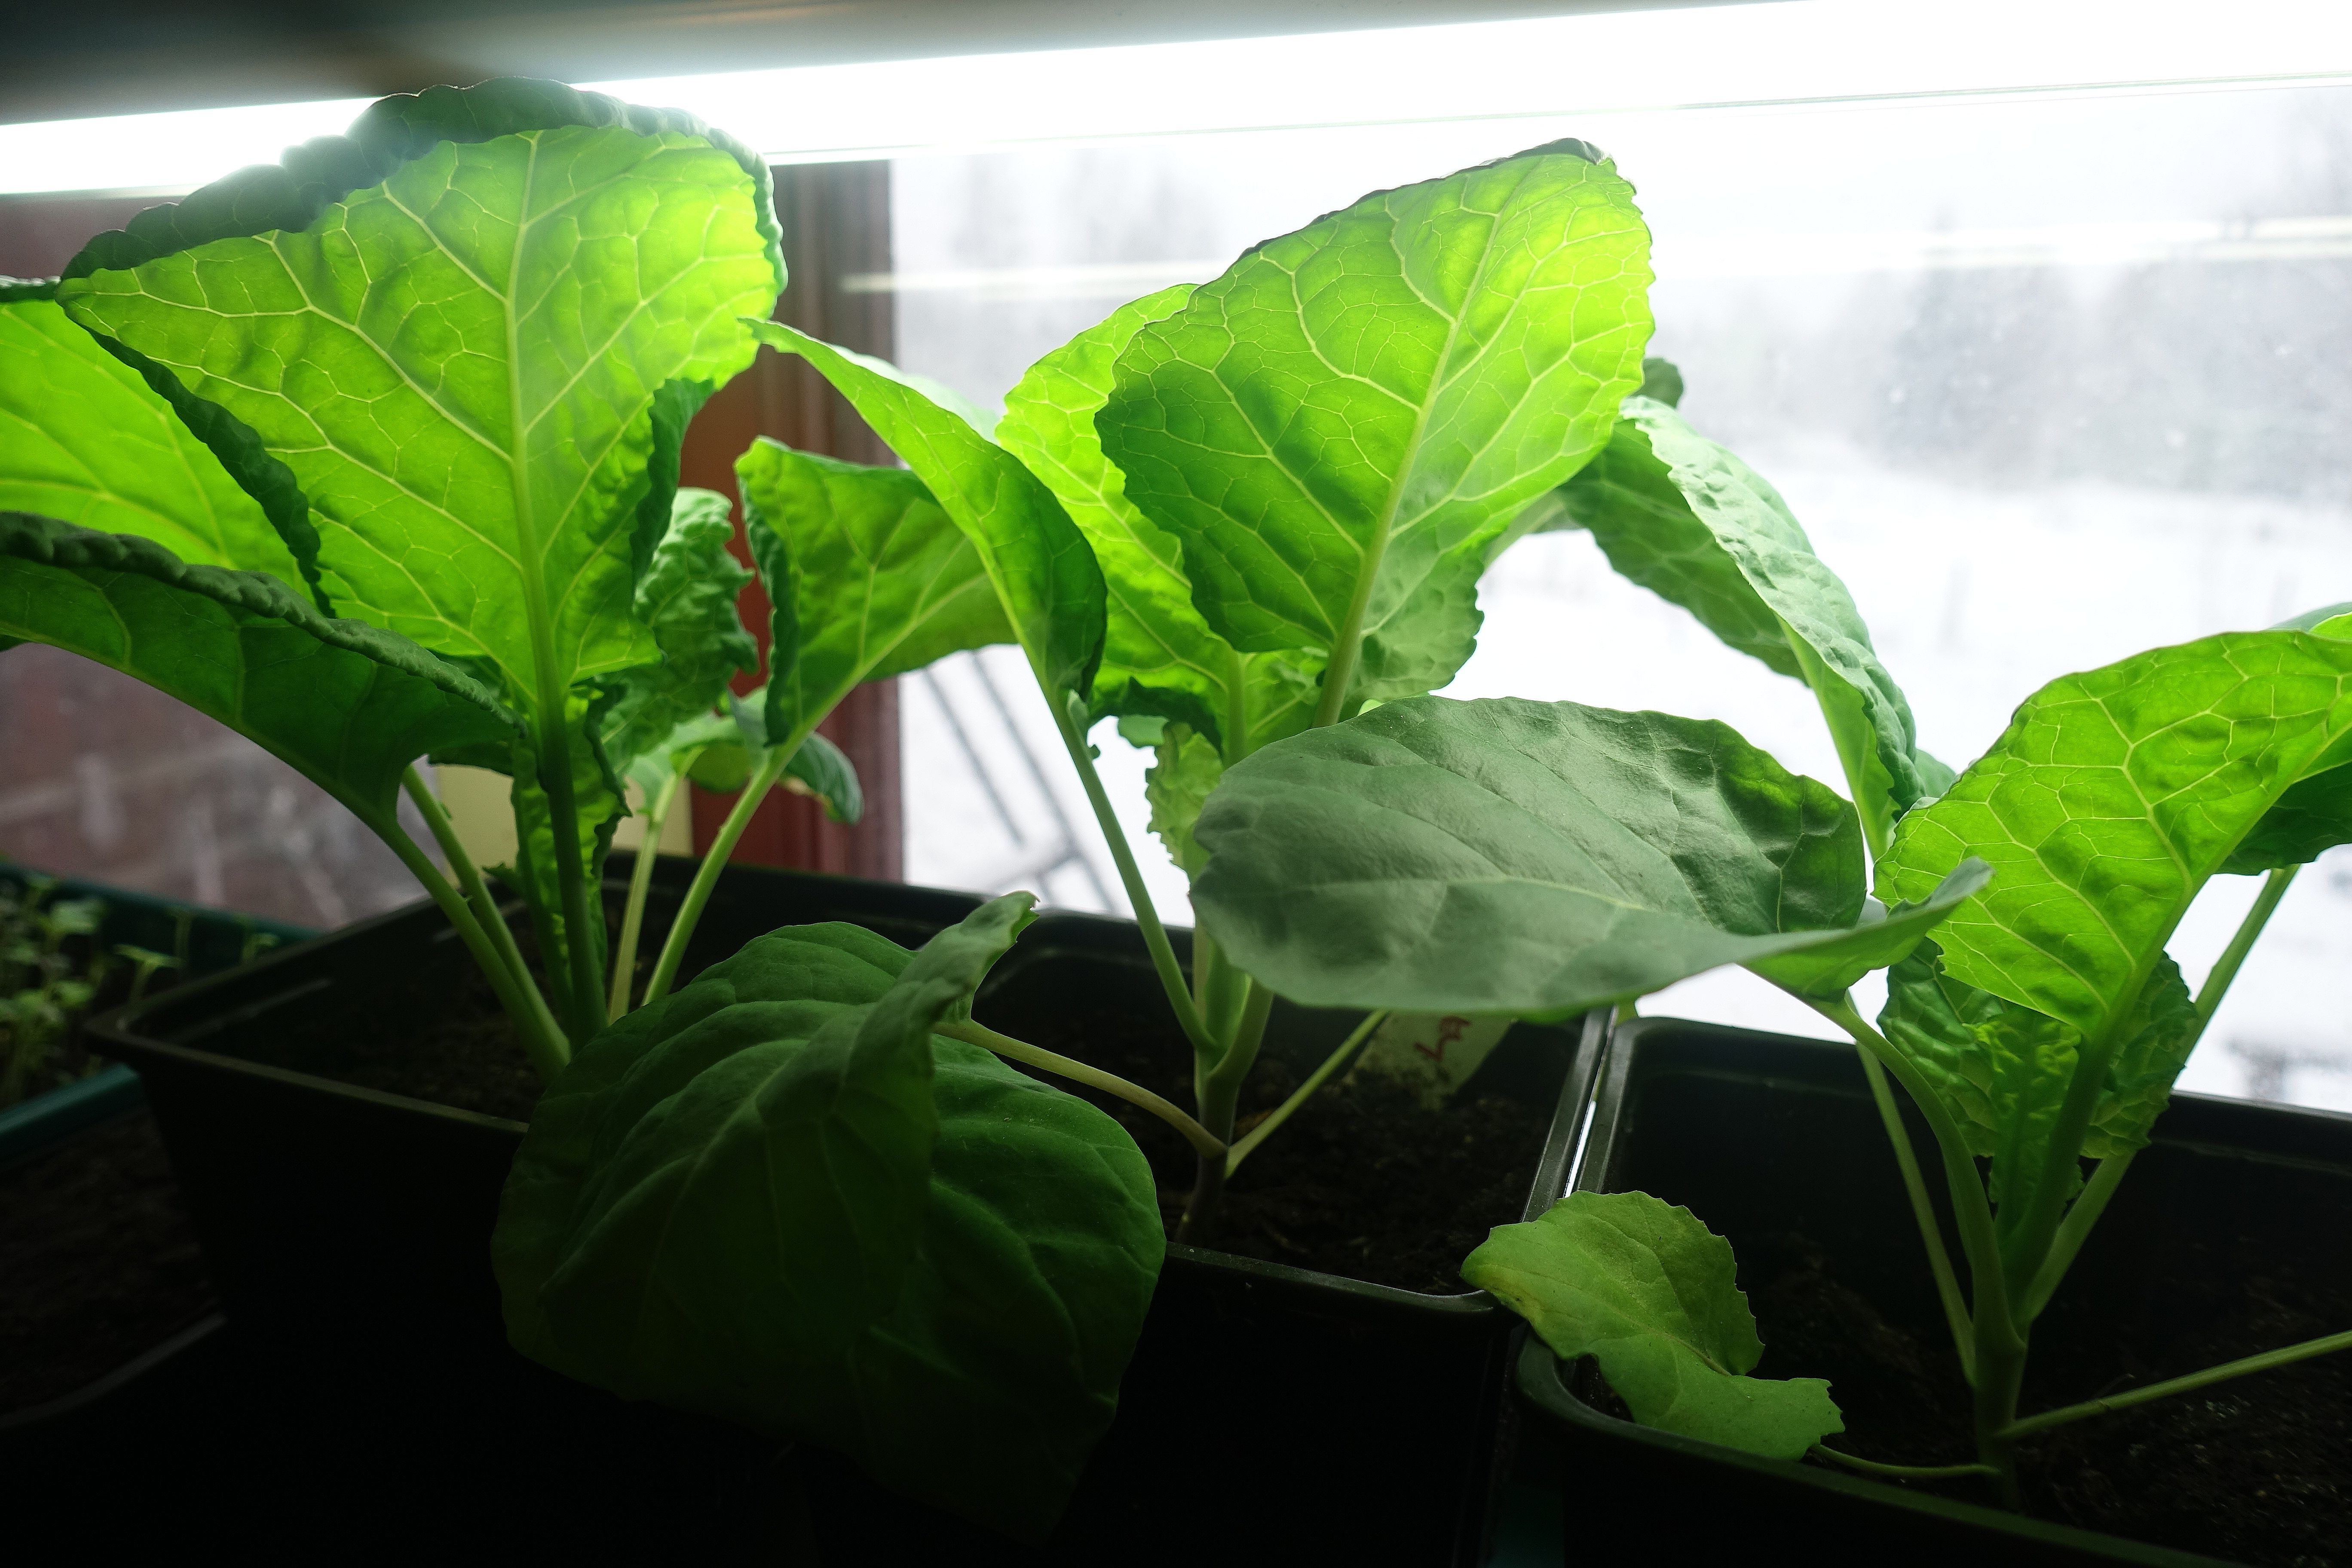 Tre kålplantor under växtbelysning i ett fönster. Fertilize with diluted urine, cabbage under grow light in my window. 